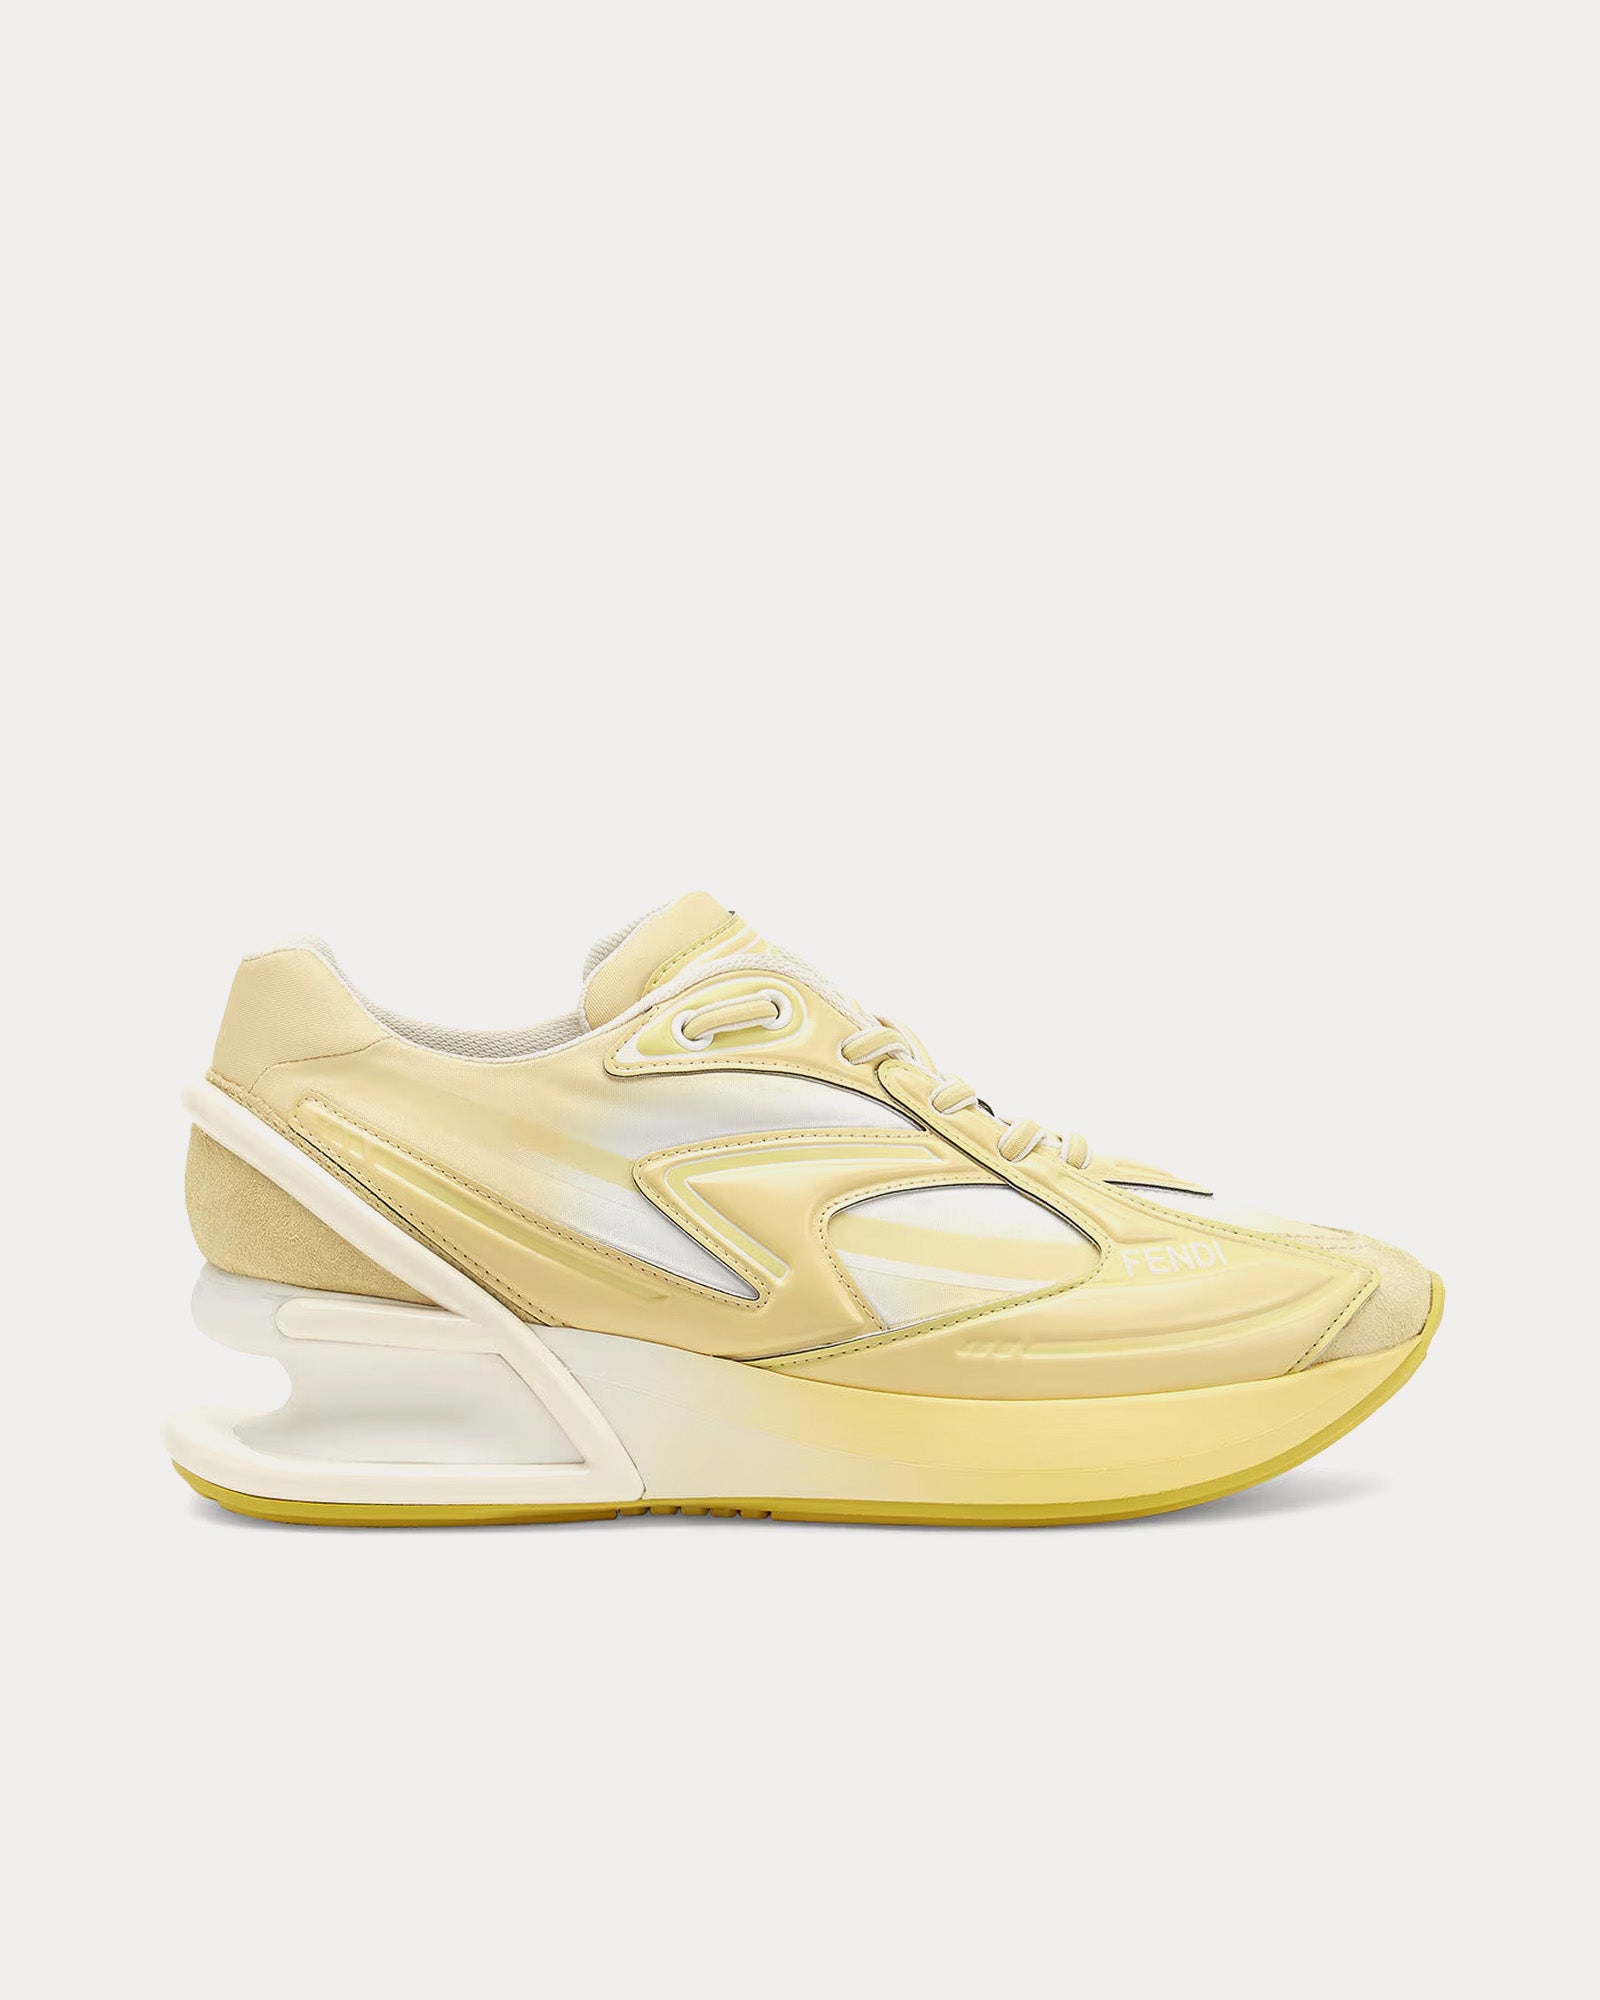 Fendi - First 1 Nylon Yellow Low Top Sneakers